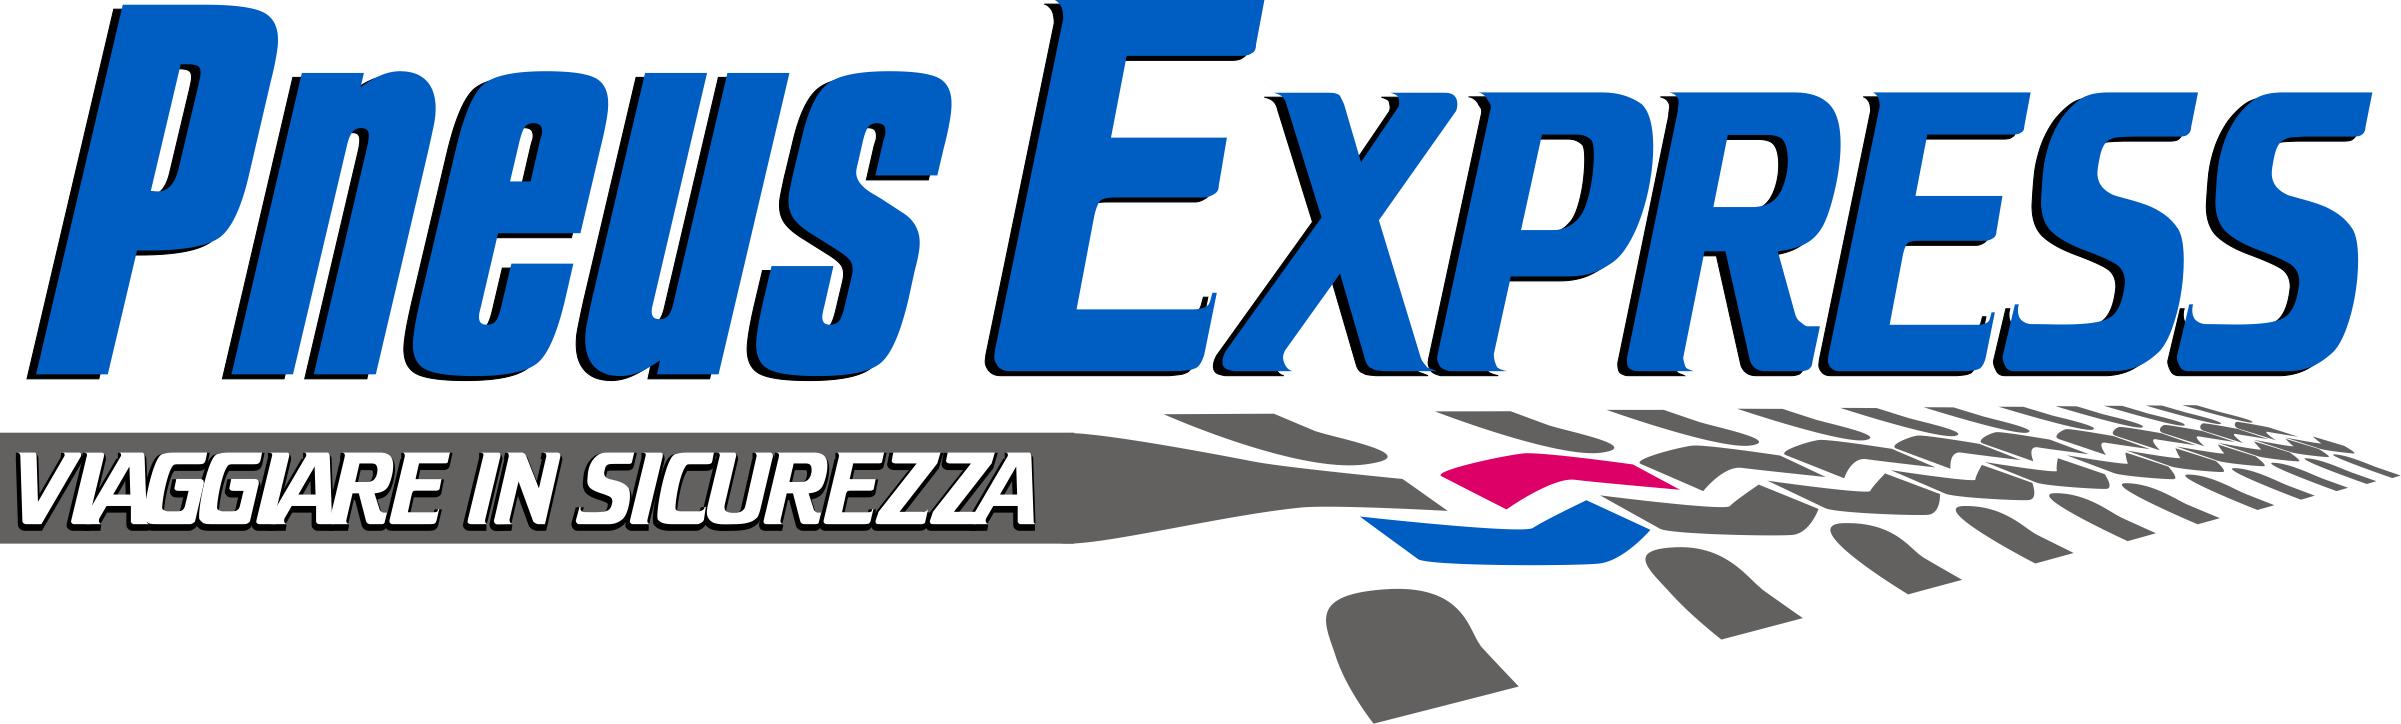 Pneus Express srl